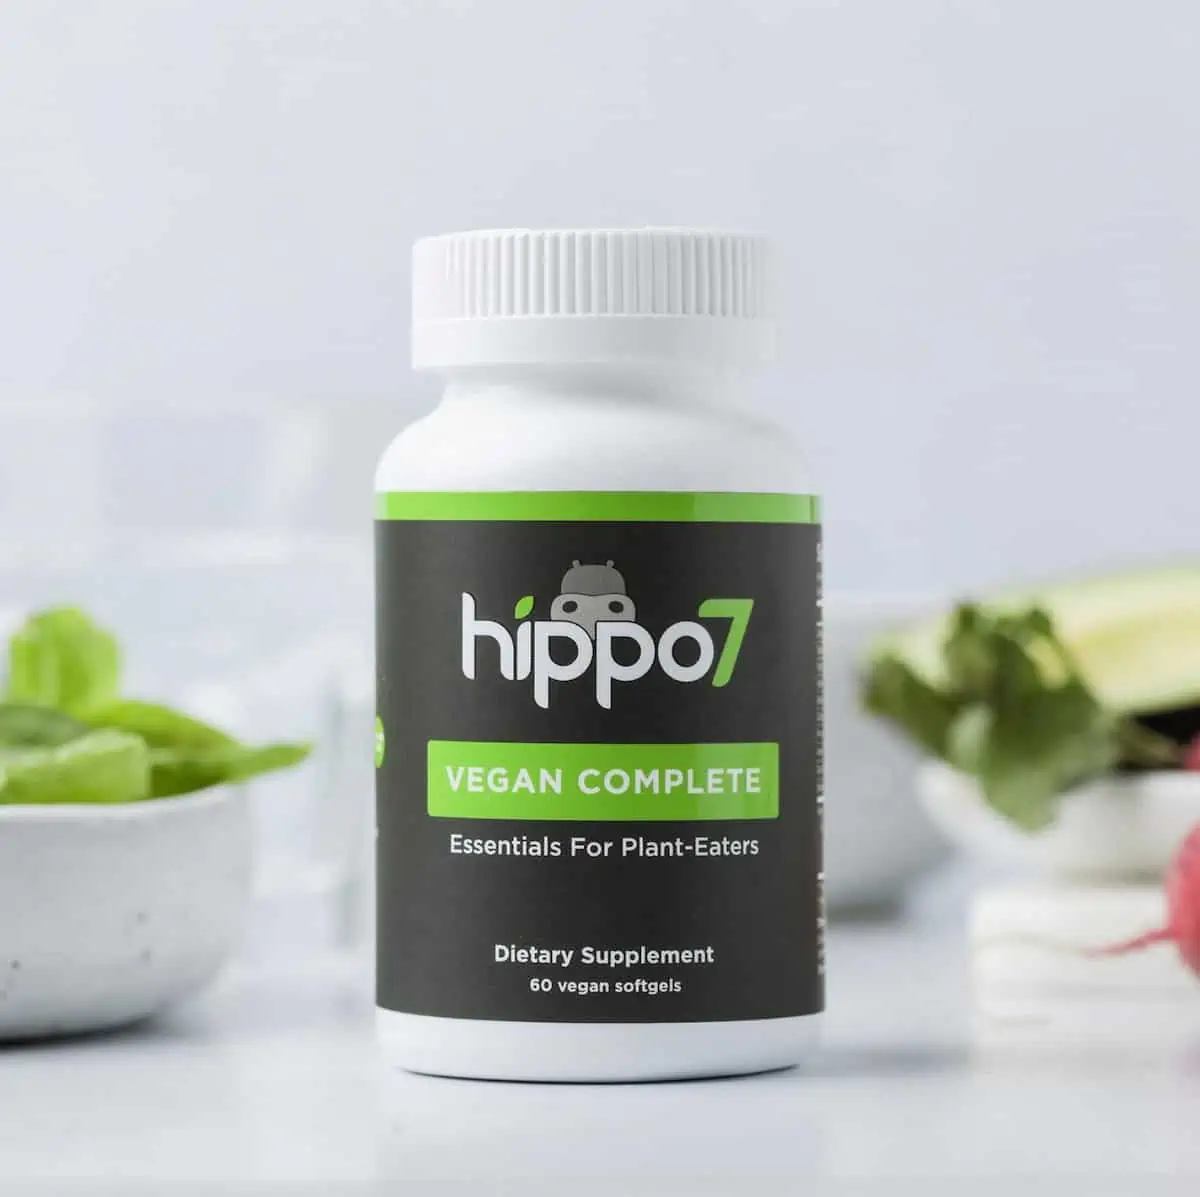 A bottle of Hippo7 brand vegan complete multivitamins.